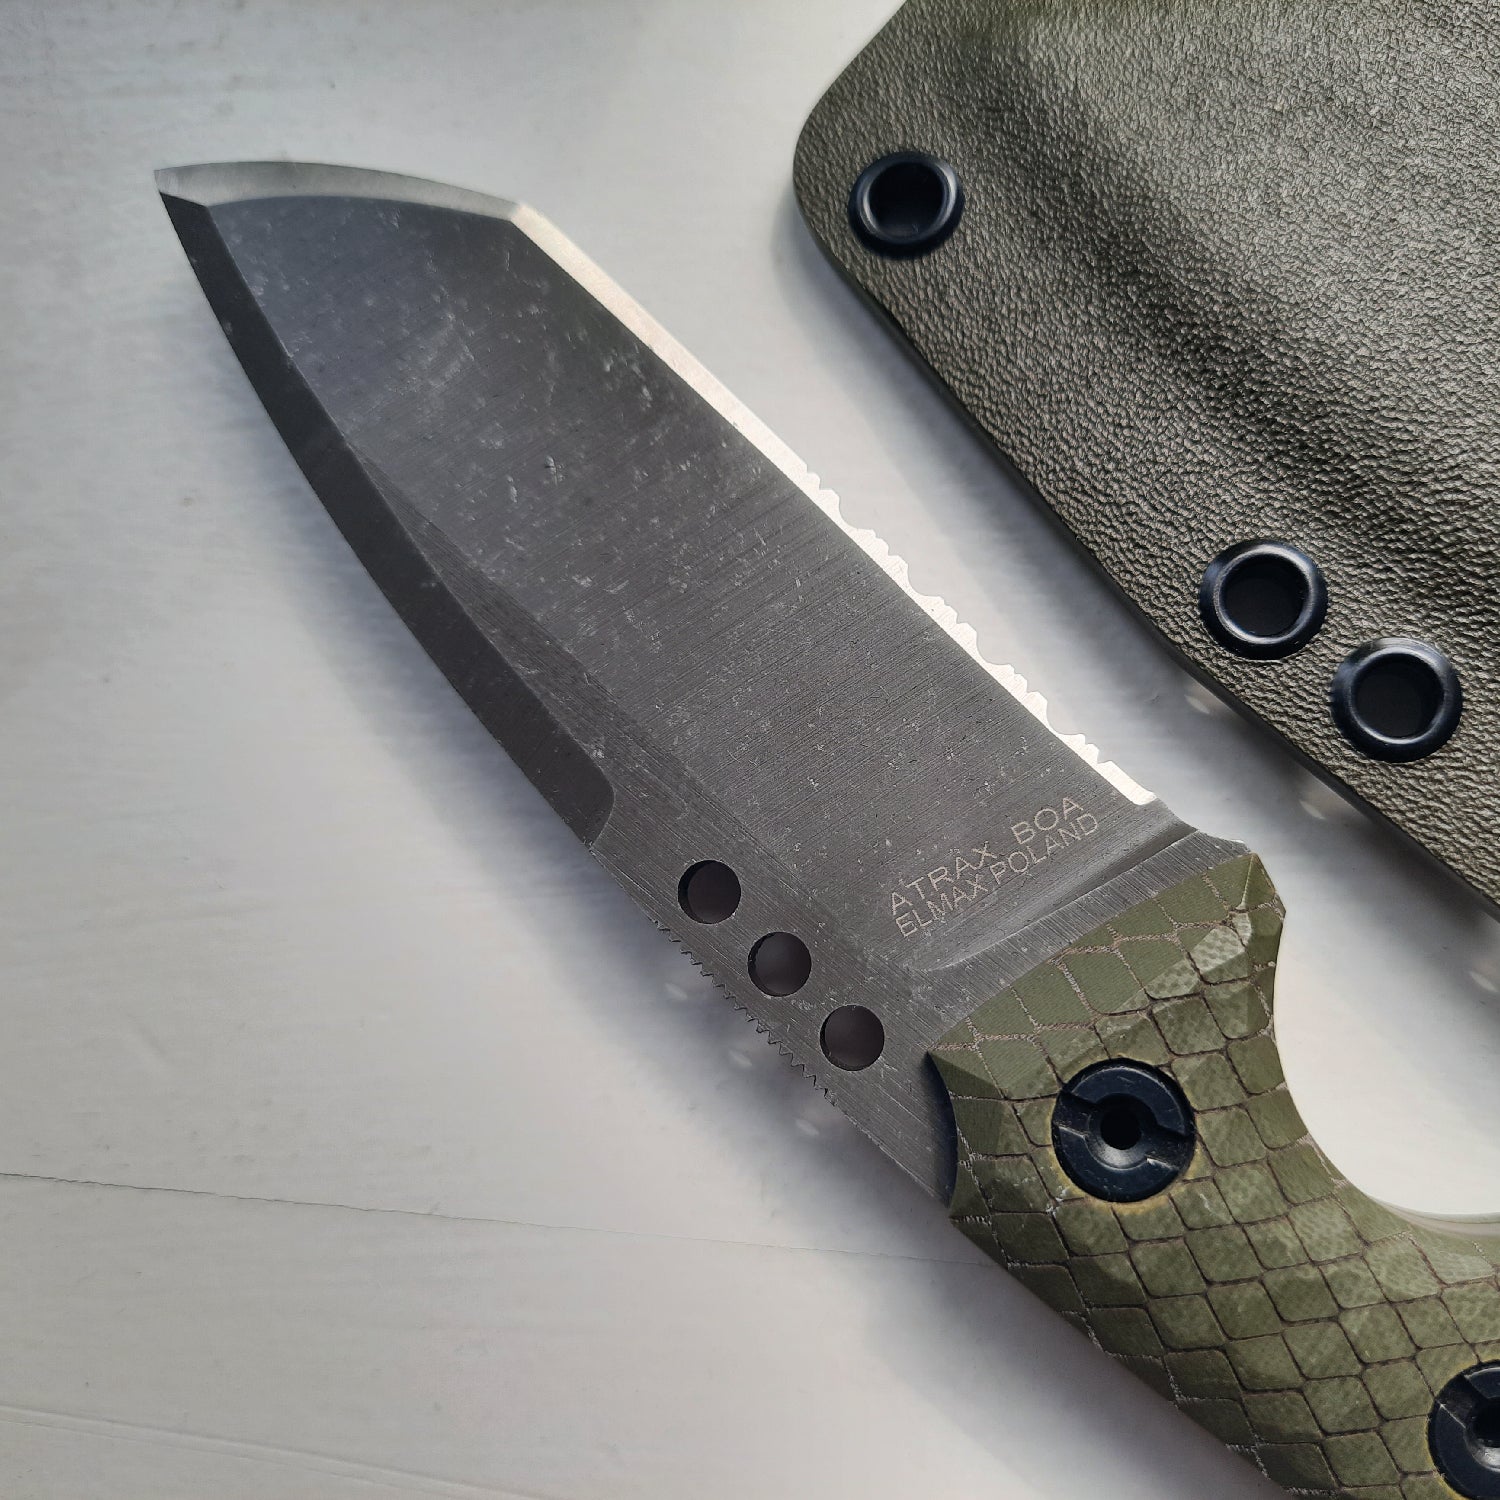 ATRAX BOA Tactical Knife - SNAKE SKIN PATERN ON HANDLE